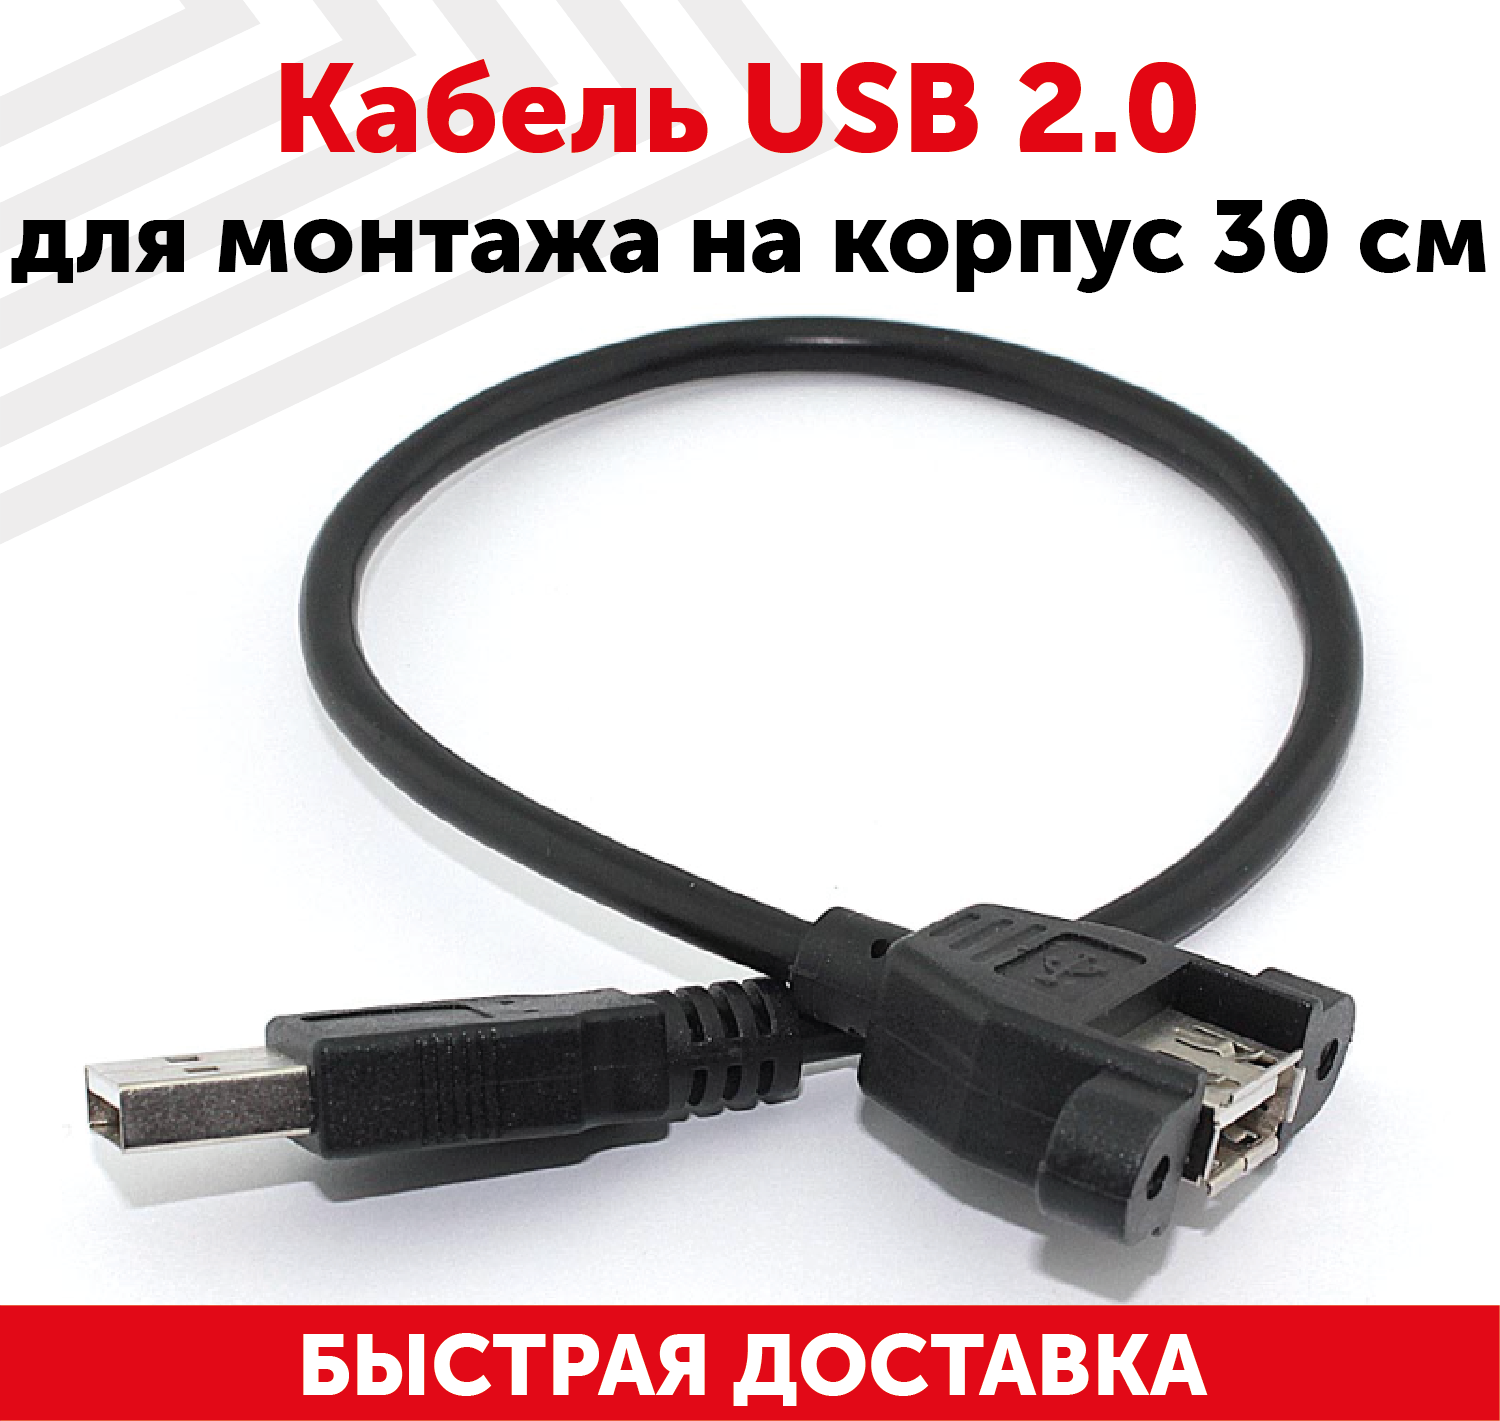 Кабель USB 2.0 для монтажа на корпус, 30 см